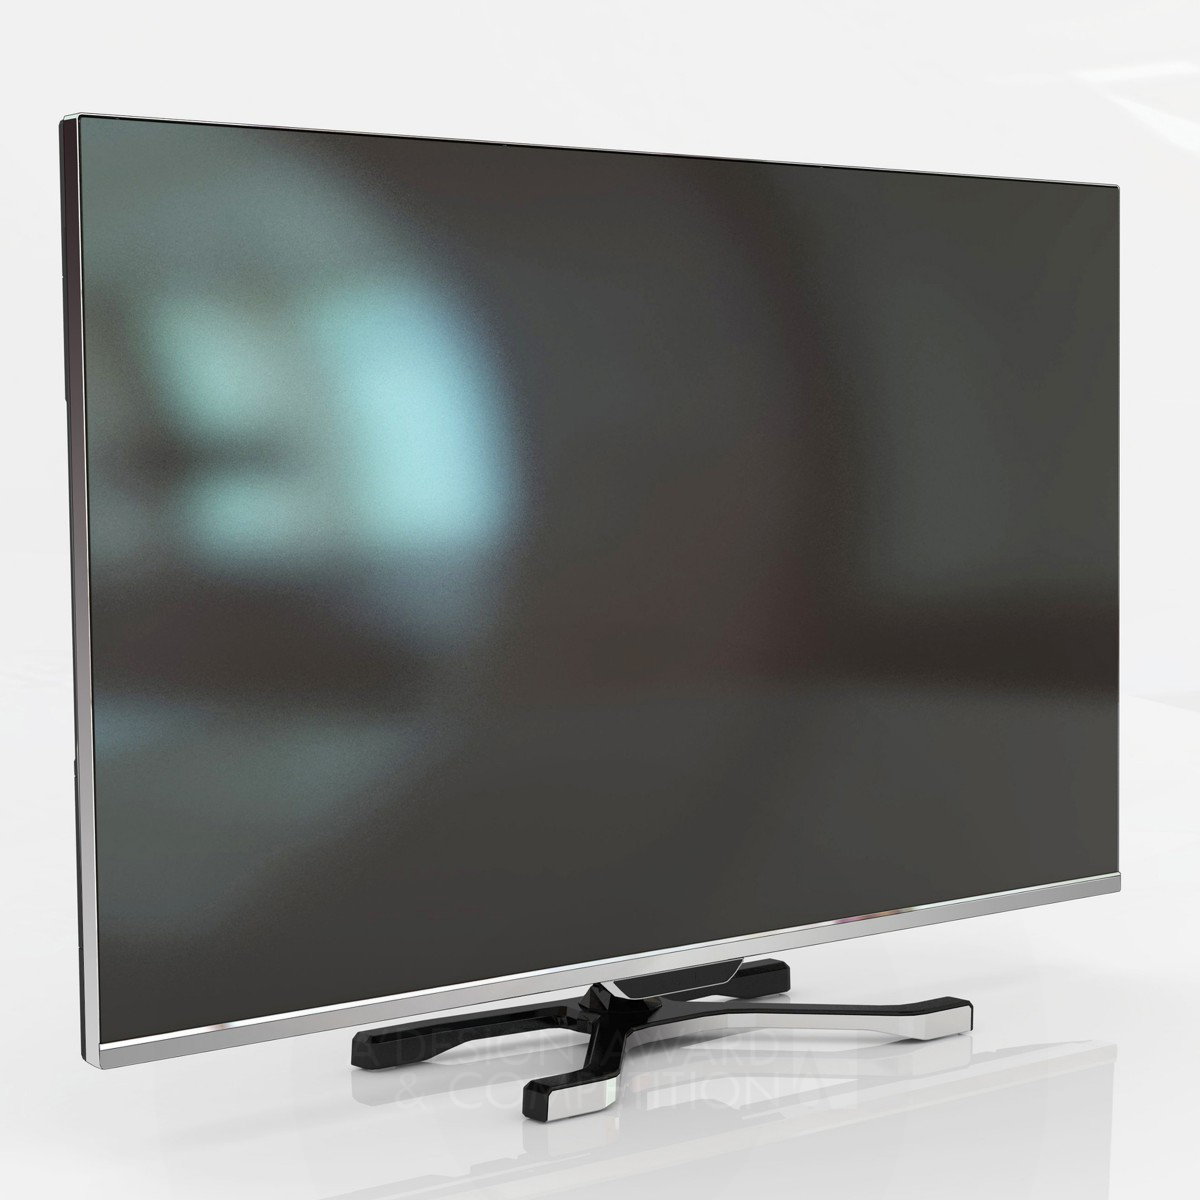 XX250 LED TV by Vestel ID Team